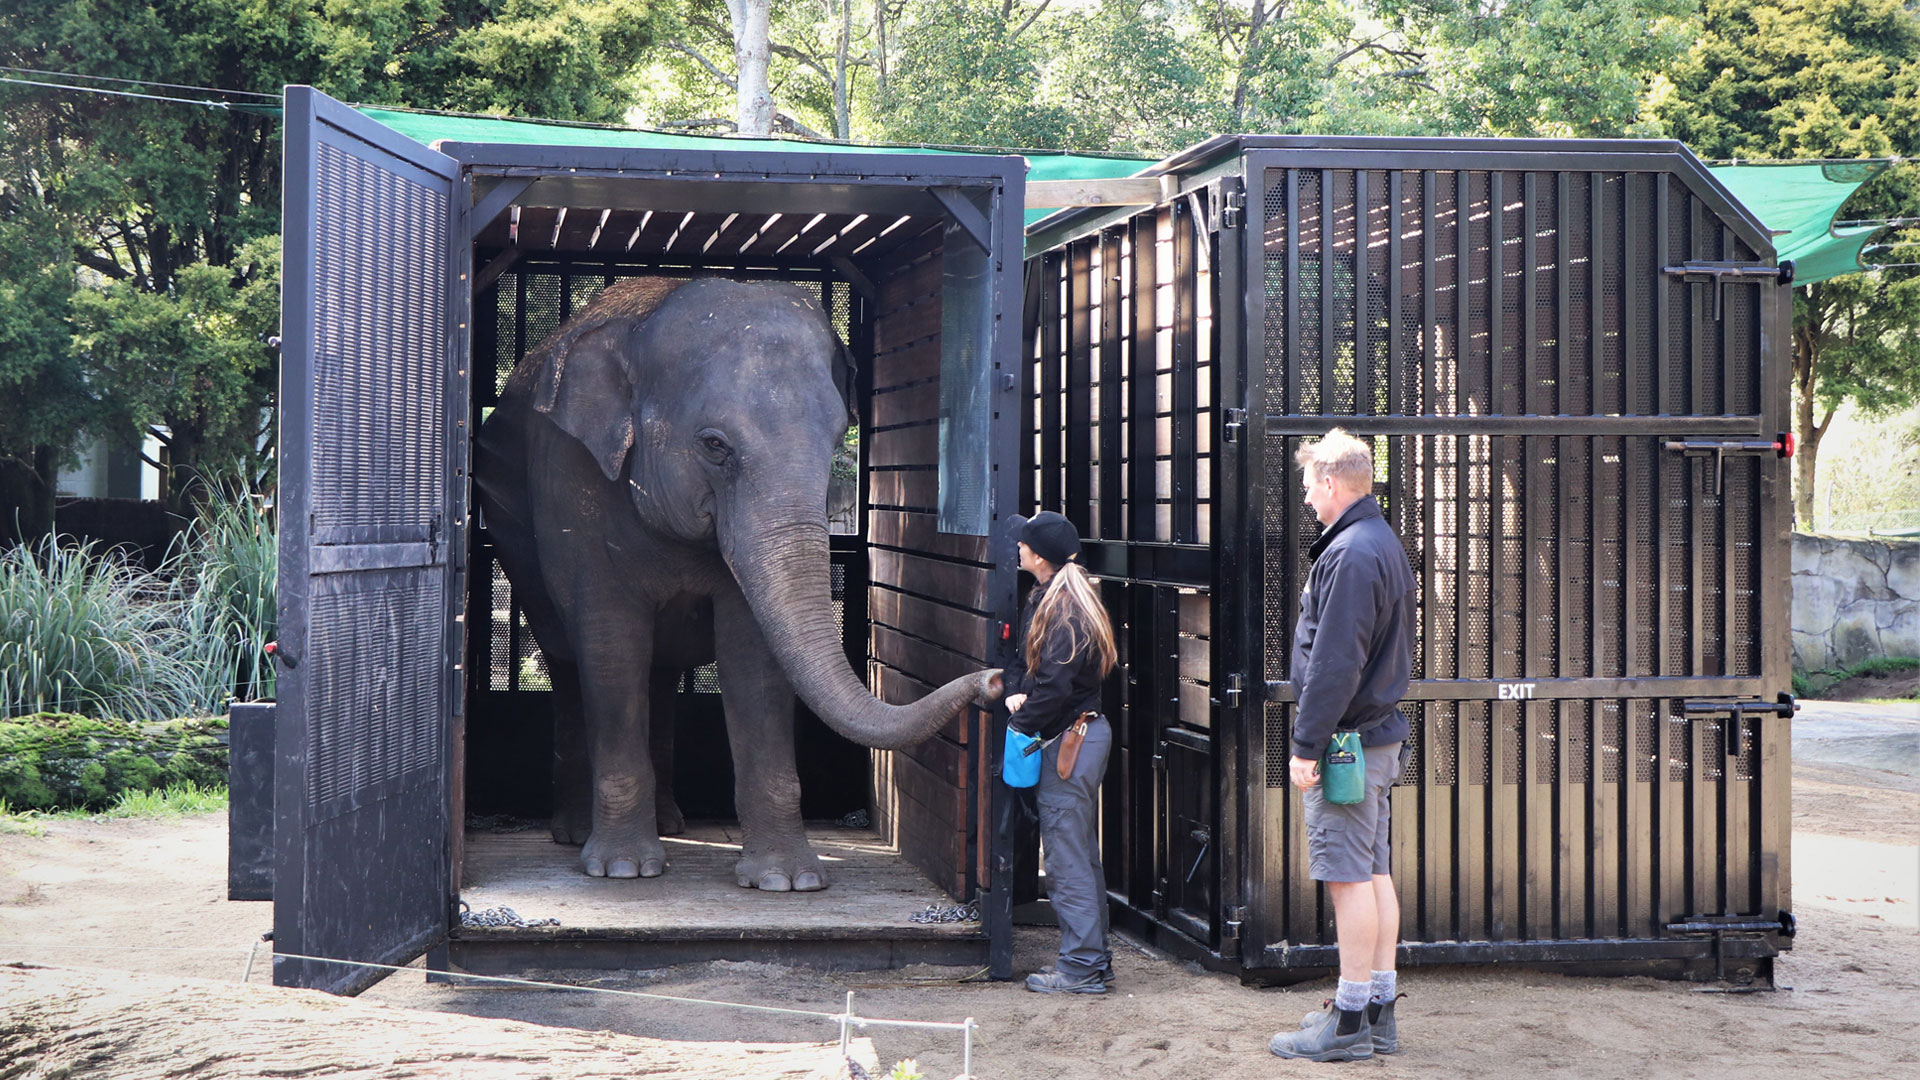 https://cdn.aucklandunlimited.com/zoo/assets/media/elephant-crate-training-gallery-1.jpg